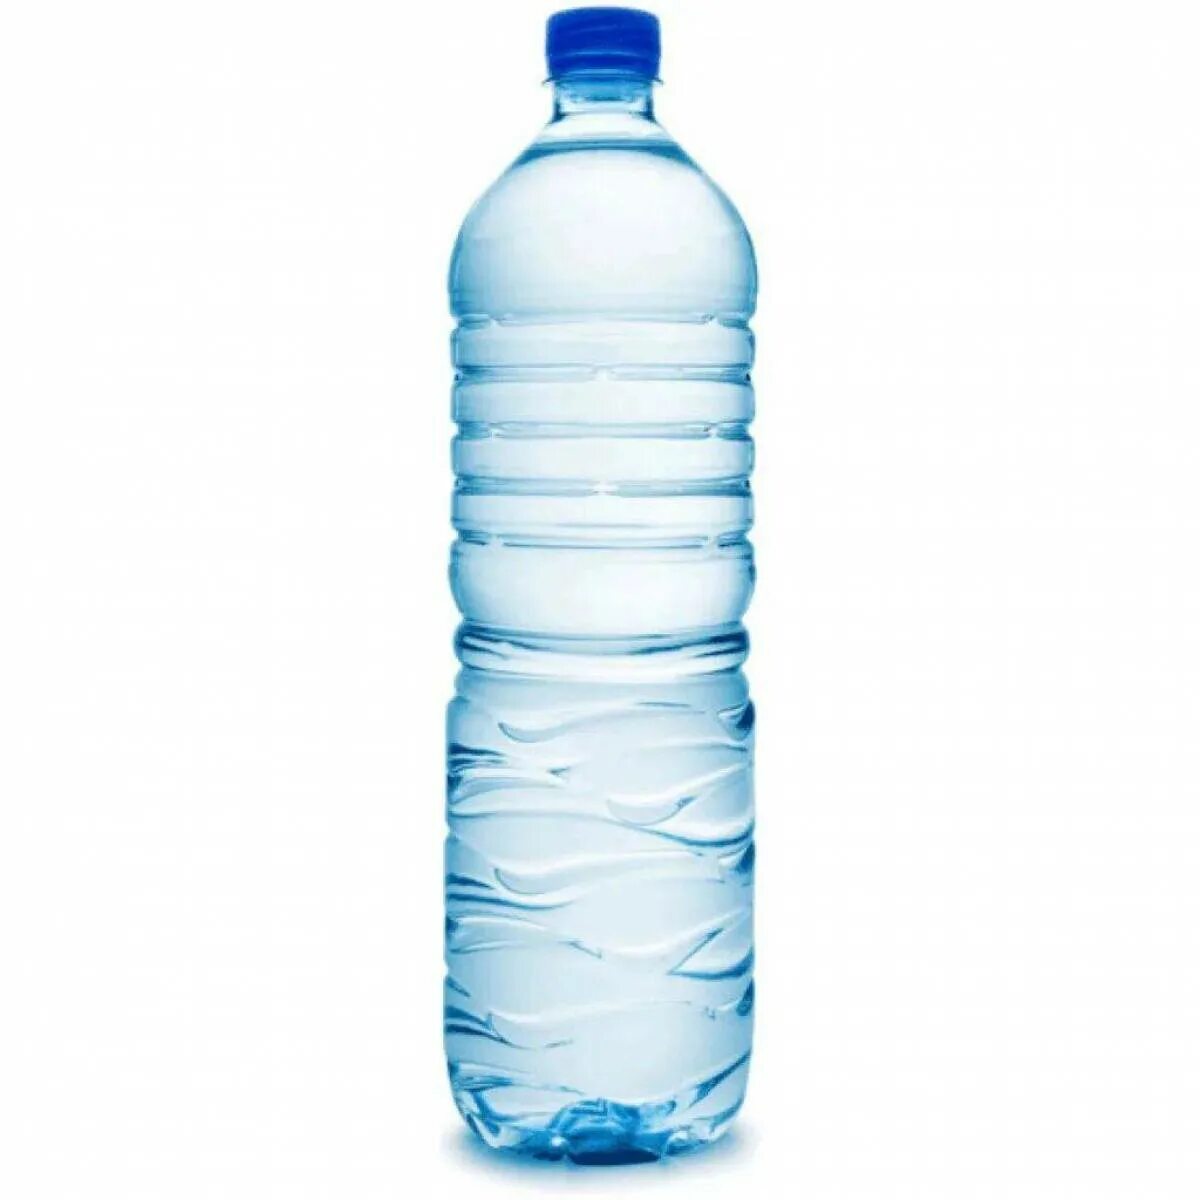 Бутылка для воды. Пластиковая бутылка для воды. Бутылка для воды 1 литр. Бутылка для воды 1.5 литра.